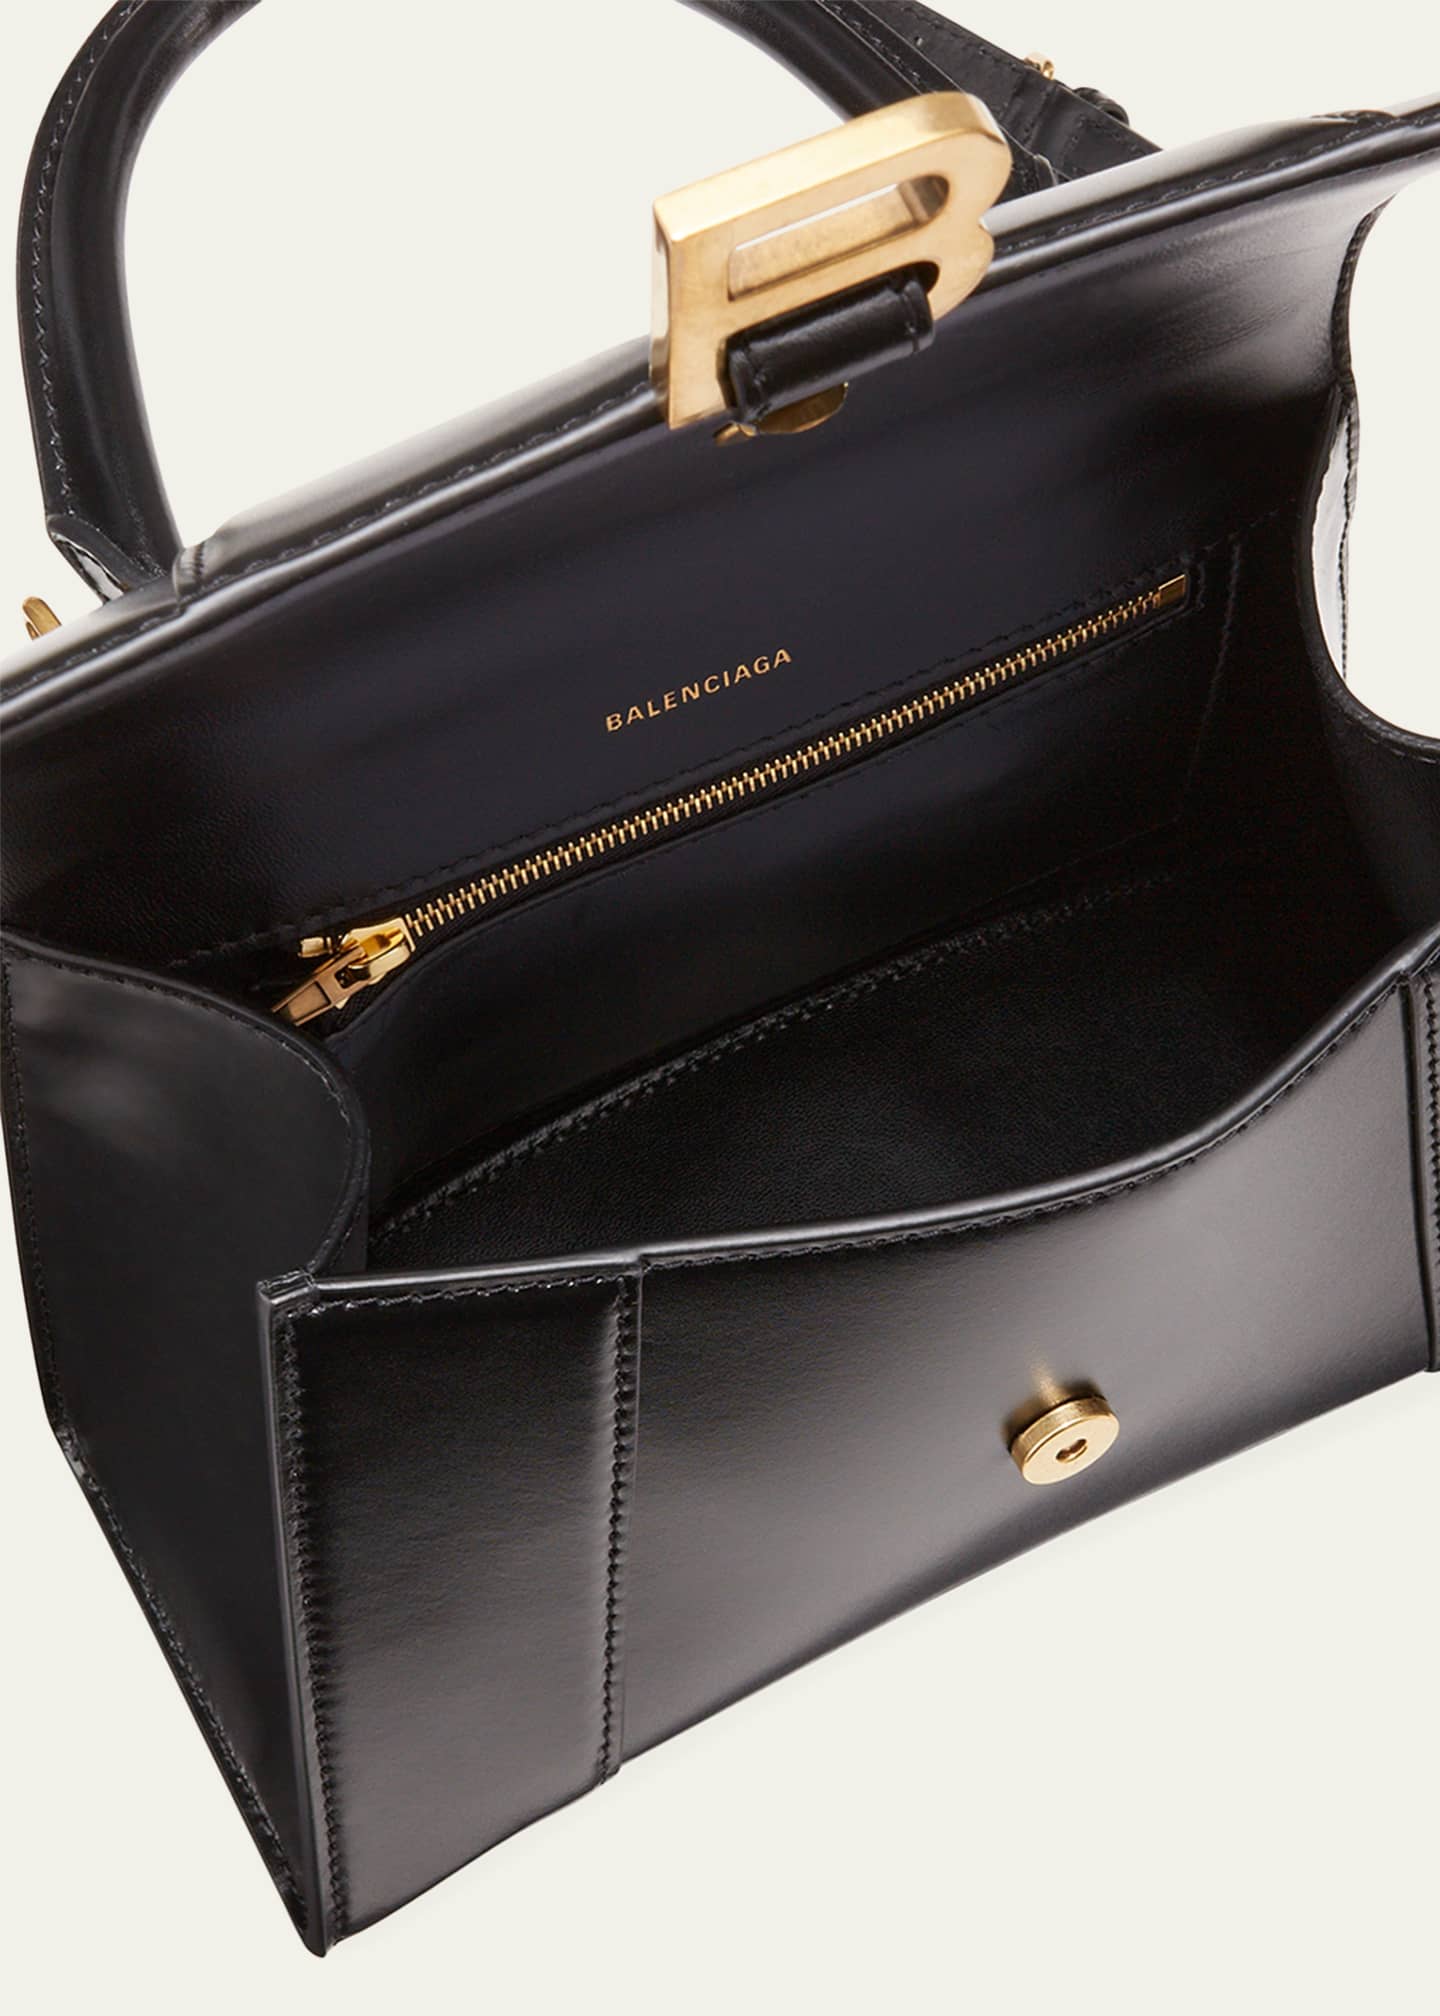 Hourglass leather handbag